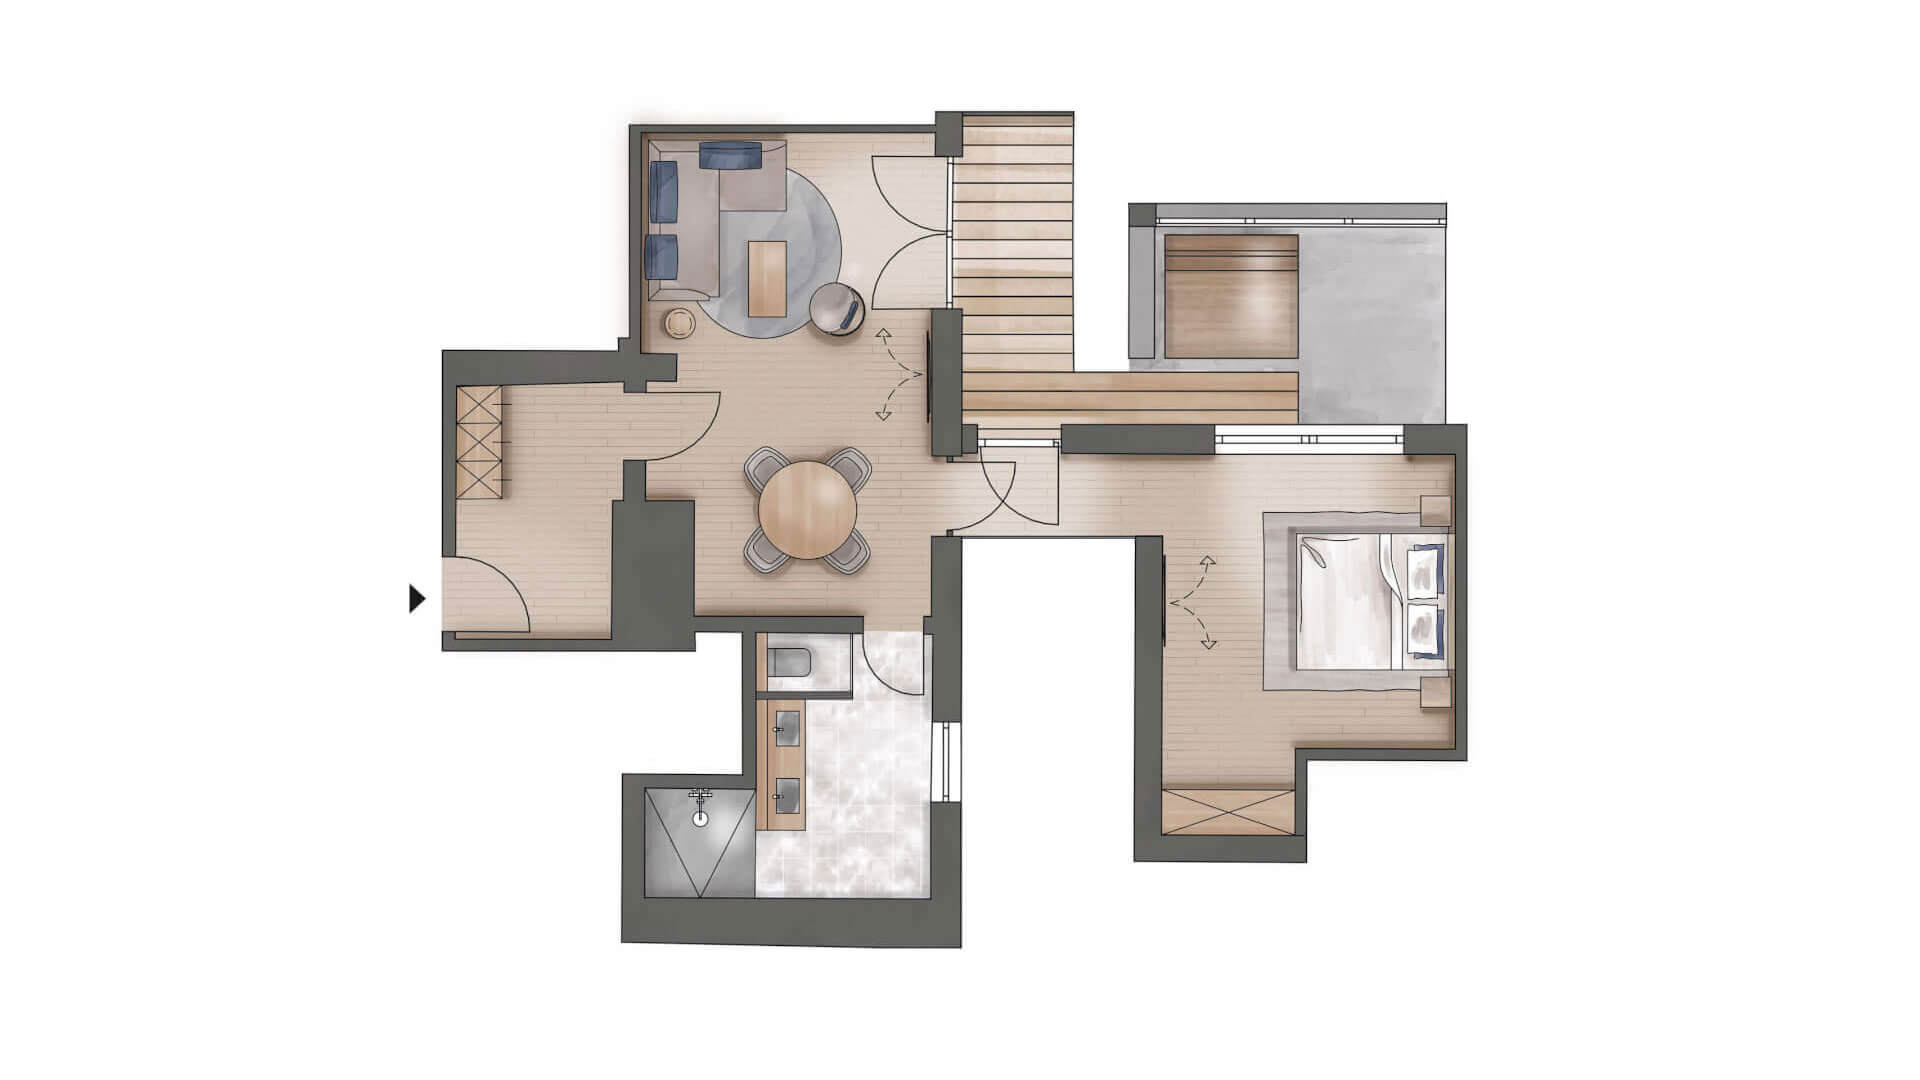 A floor plan of a house